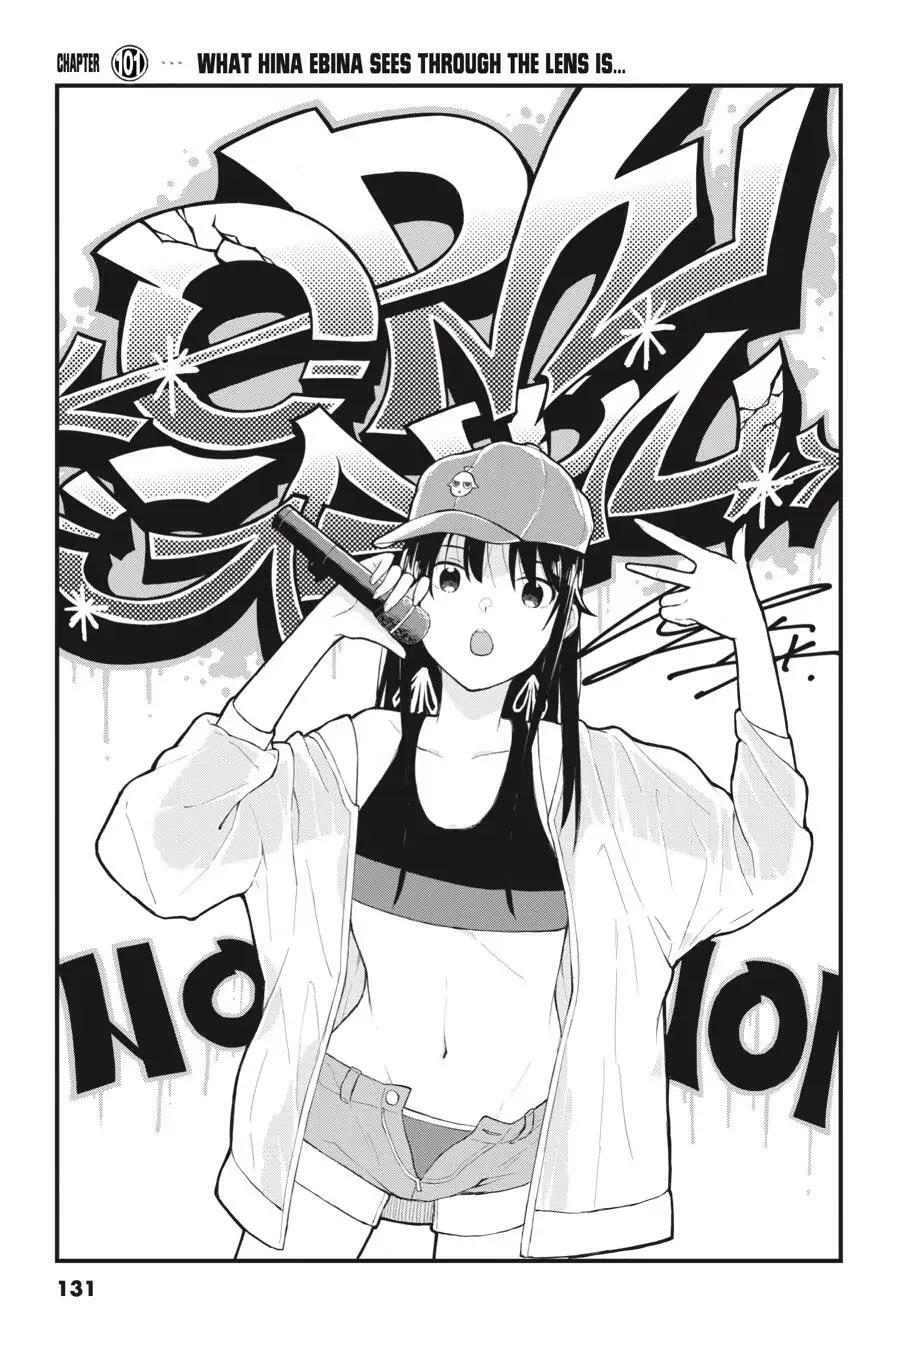 Read Yahari Ore No Seishun Rabukome Wa Machigatte Iru. @ Comic Chapter 91  on Mangakakalot